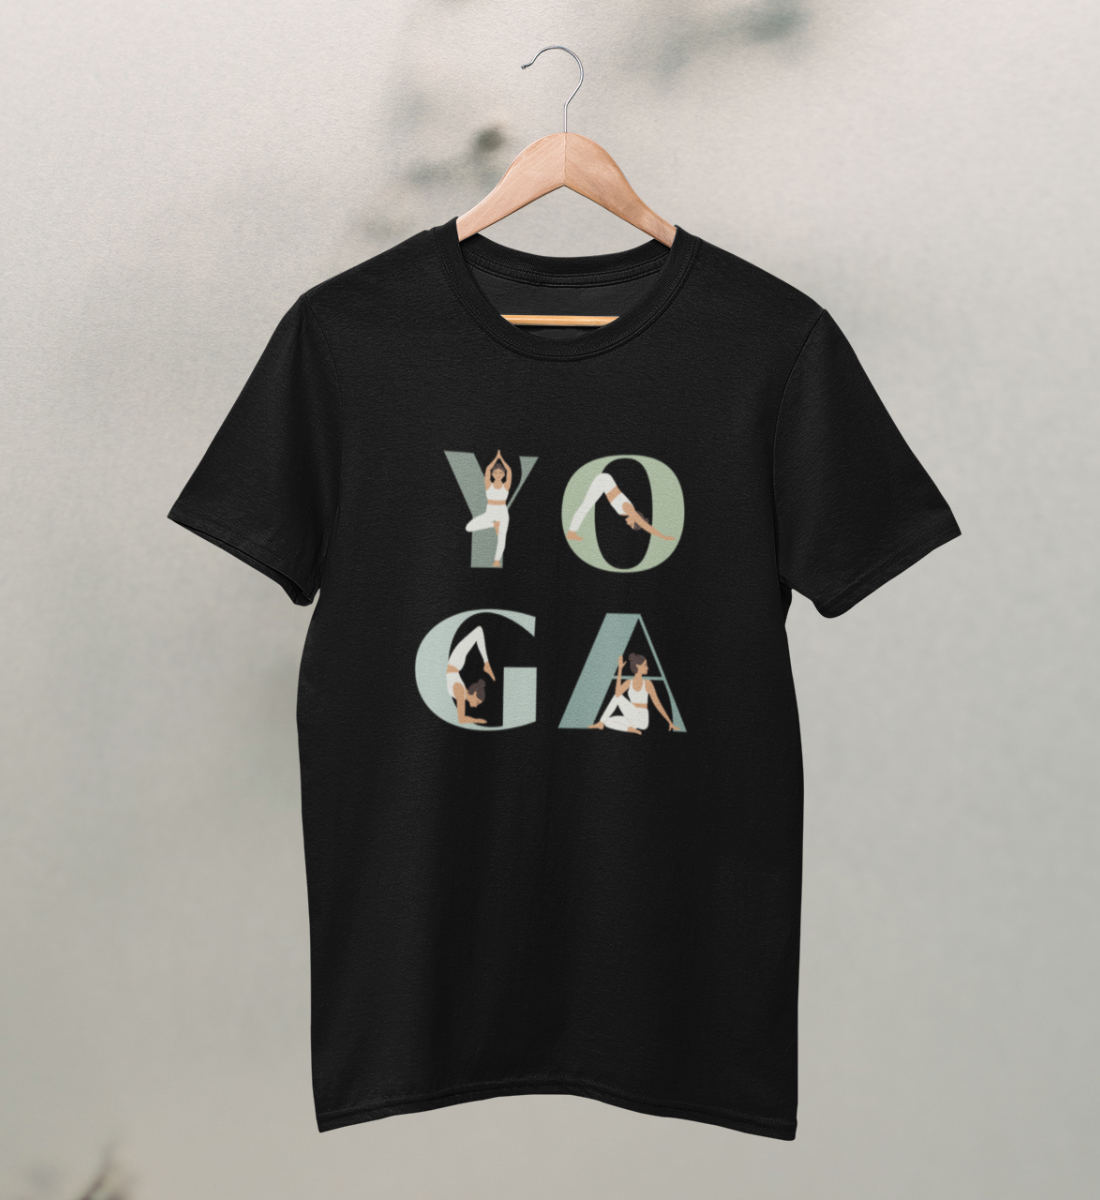 yoga girl l bio t-shirt kinder schwarz l yoga shirt l yoga kleidung bio-baumwolle l umweltfreundliche mode online shoppen